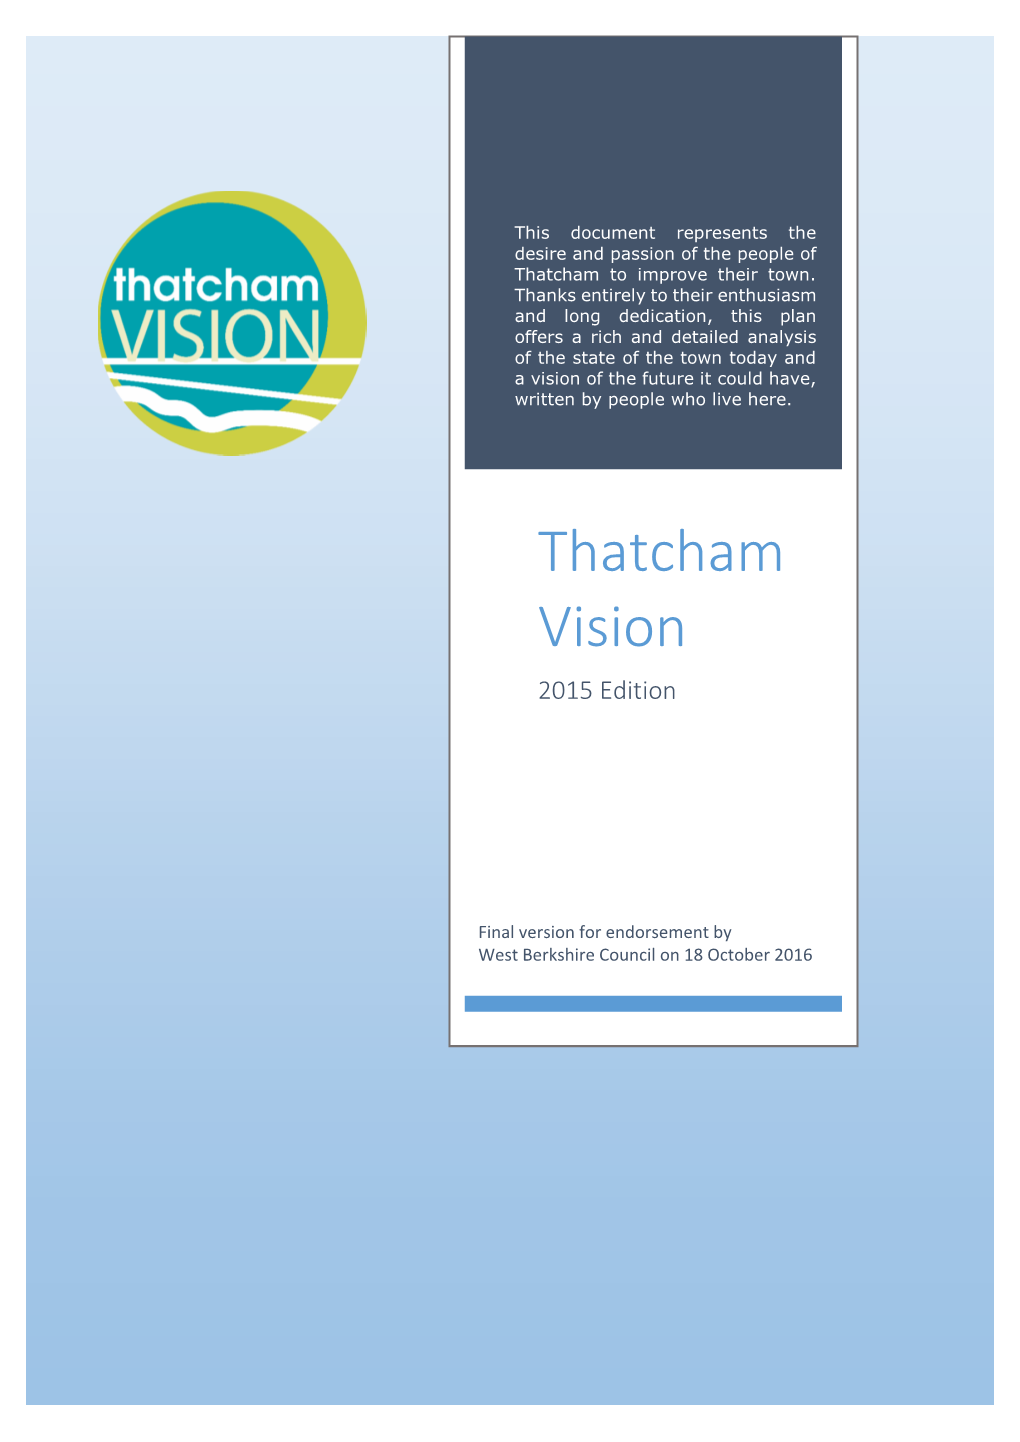 Thatcham Vision 2015 Edition